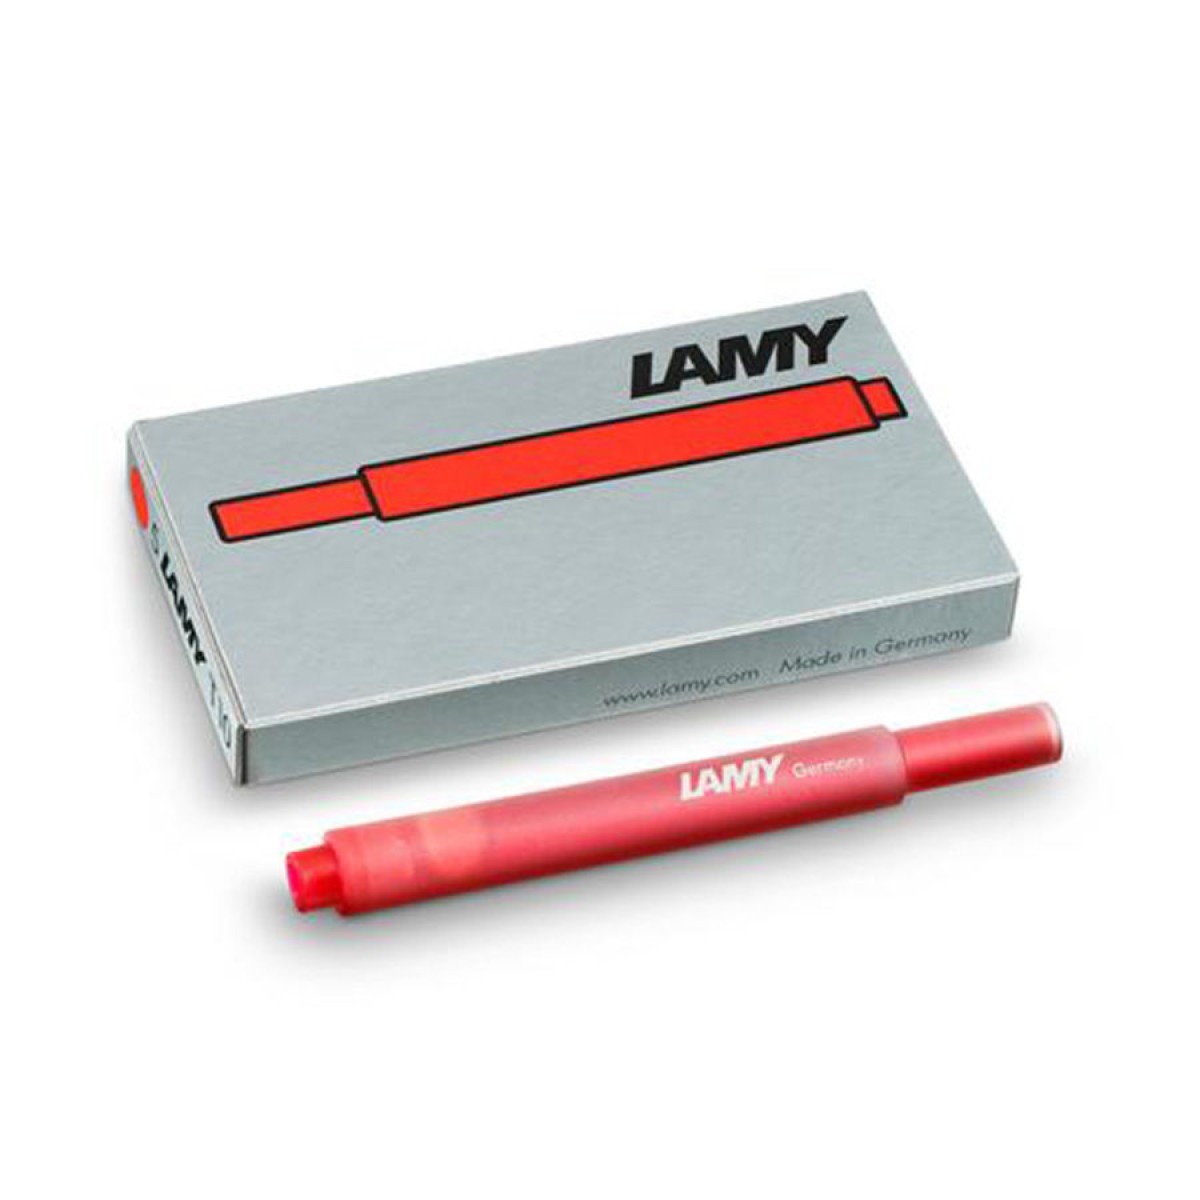 LAMY T10 Ανταλλακτική Αμπούλα Μελάνης - Κόκκινο